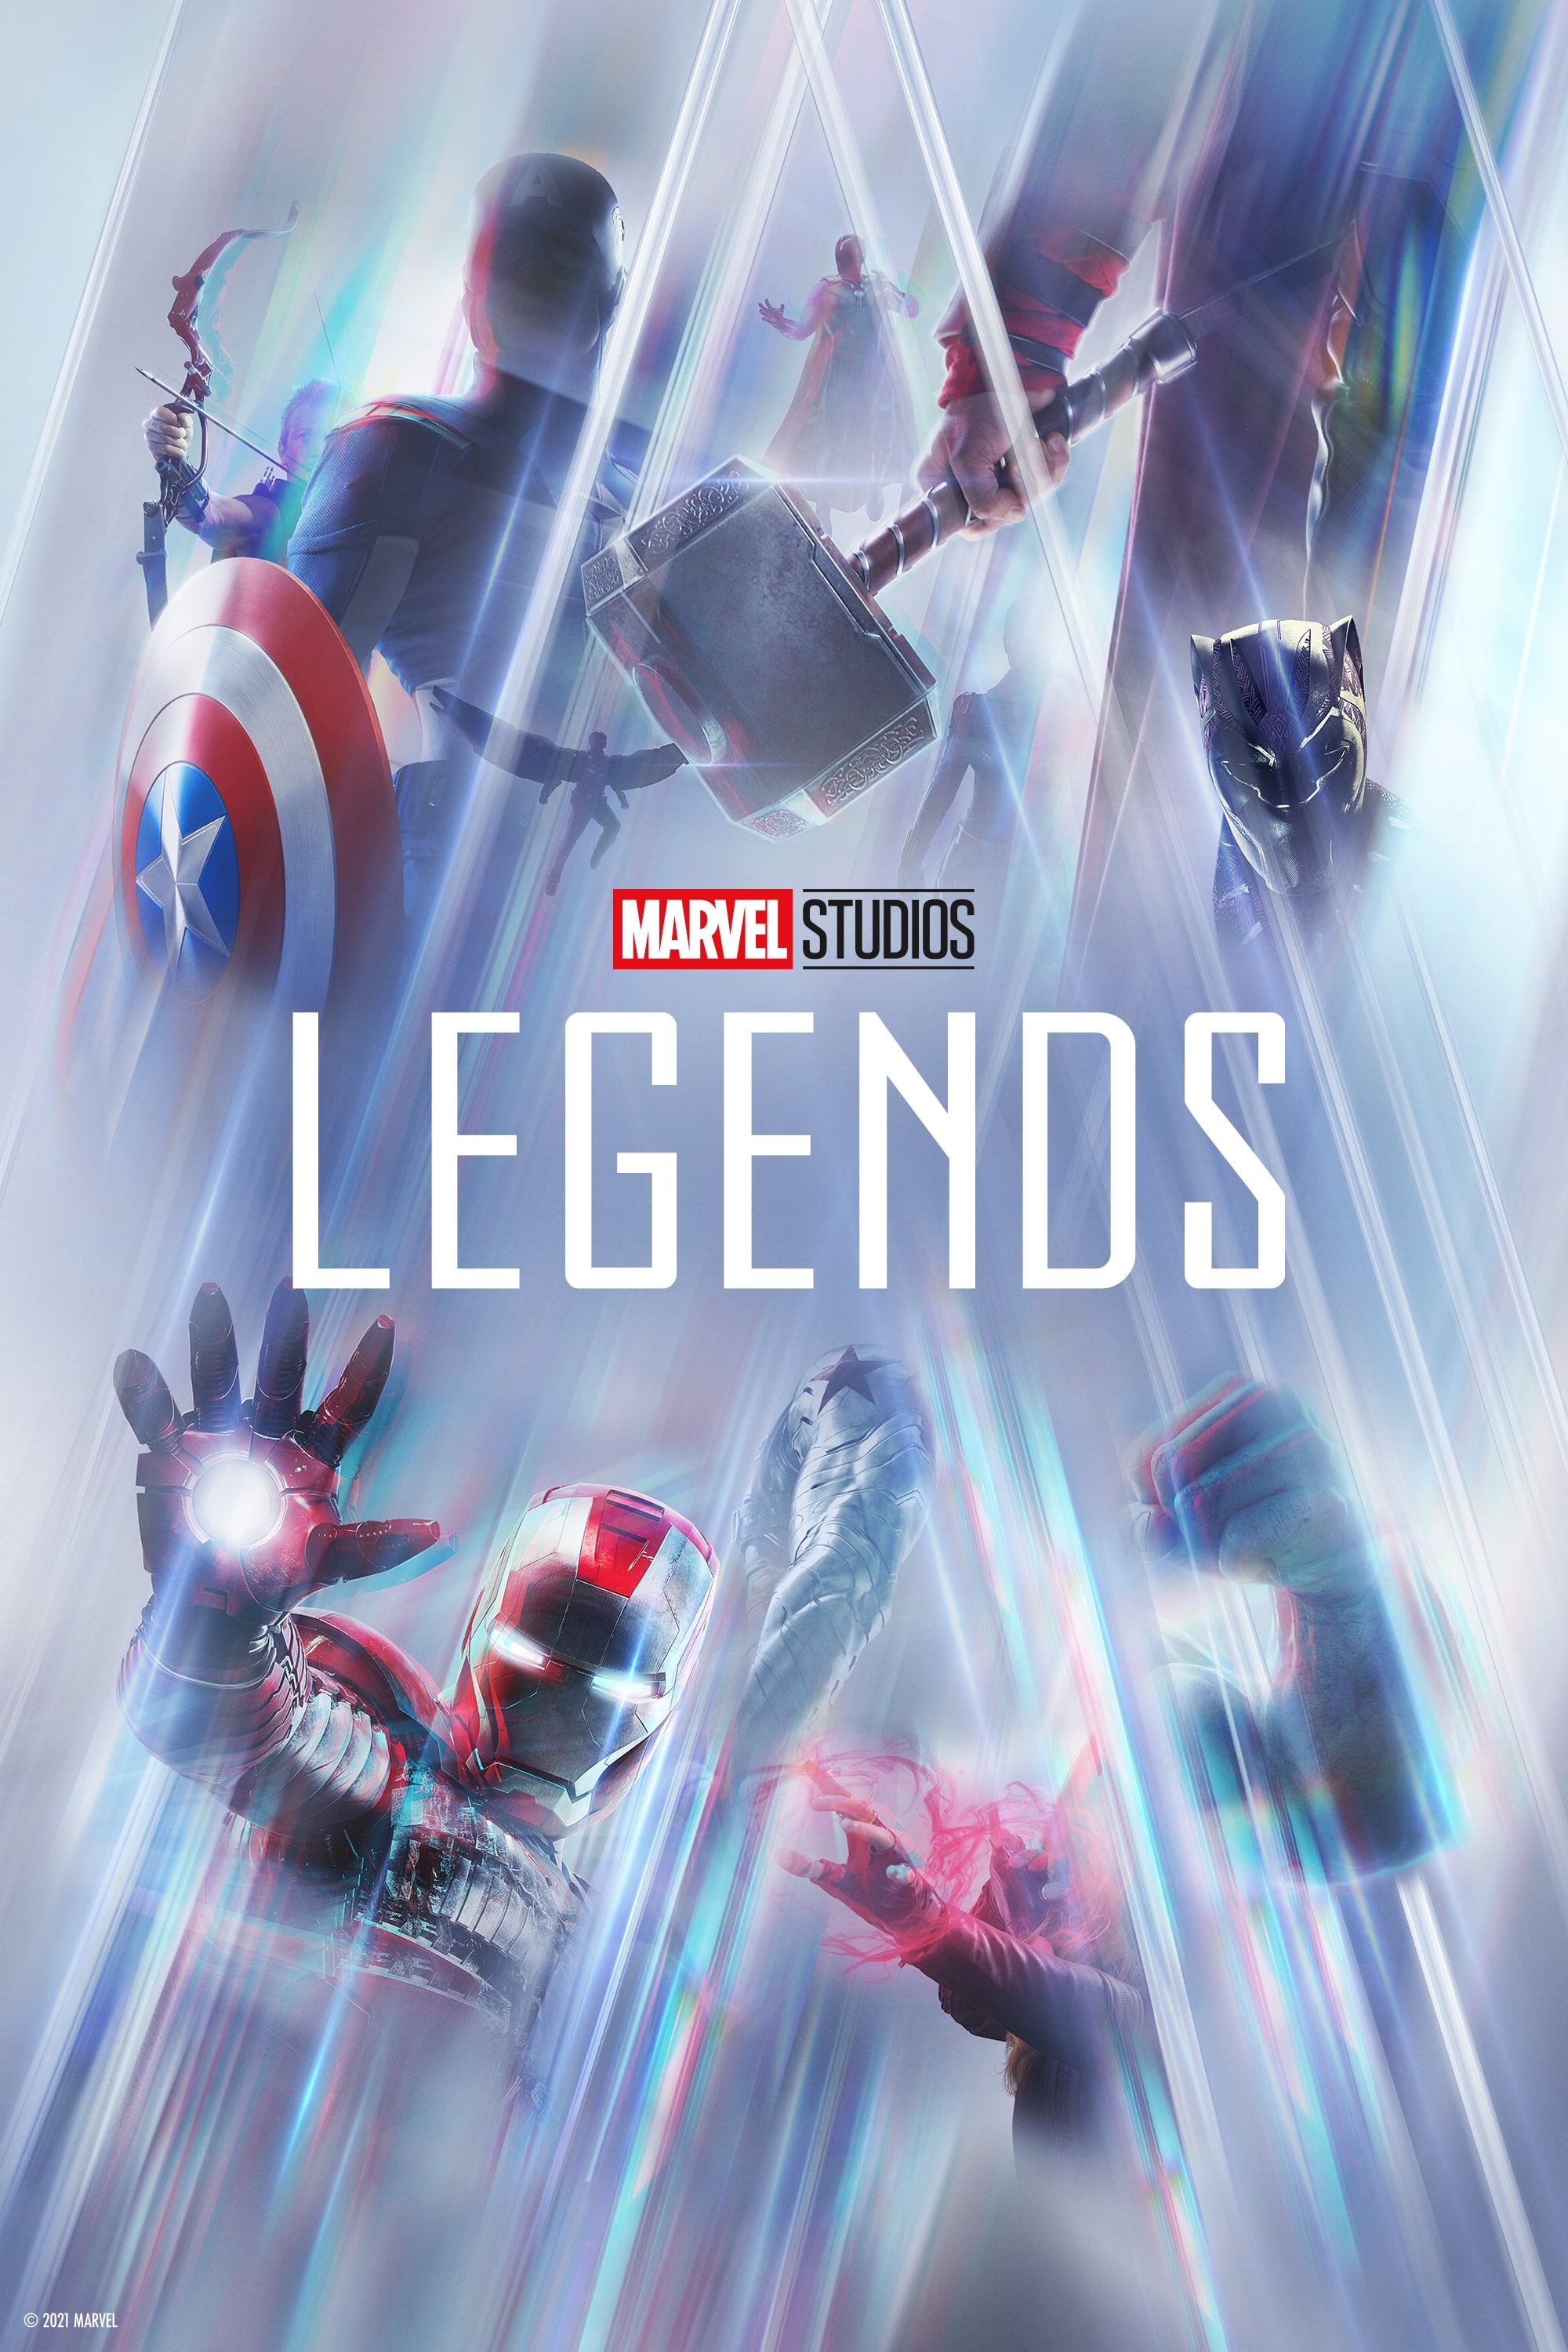 Marvel Studios Legends (Season 02) 1080p